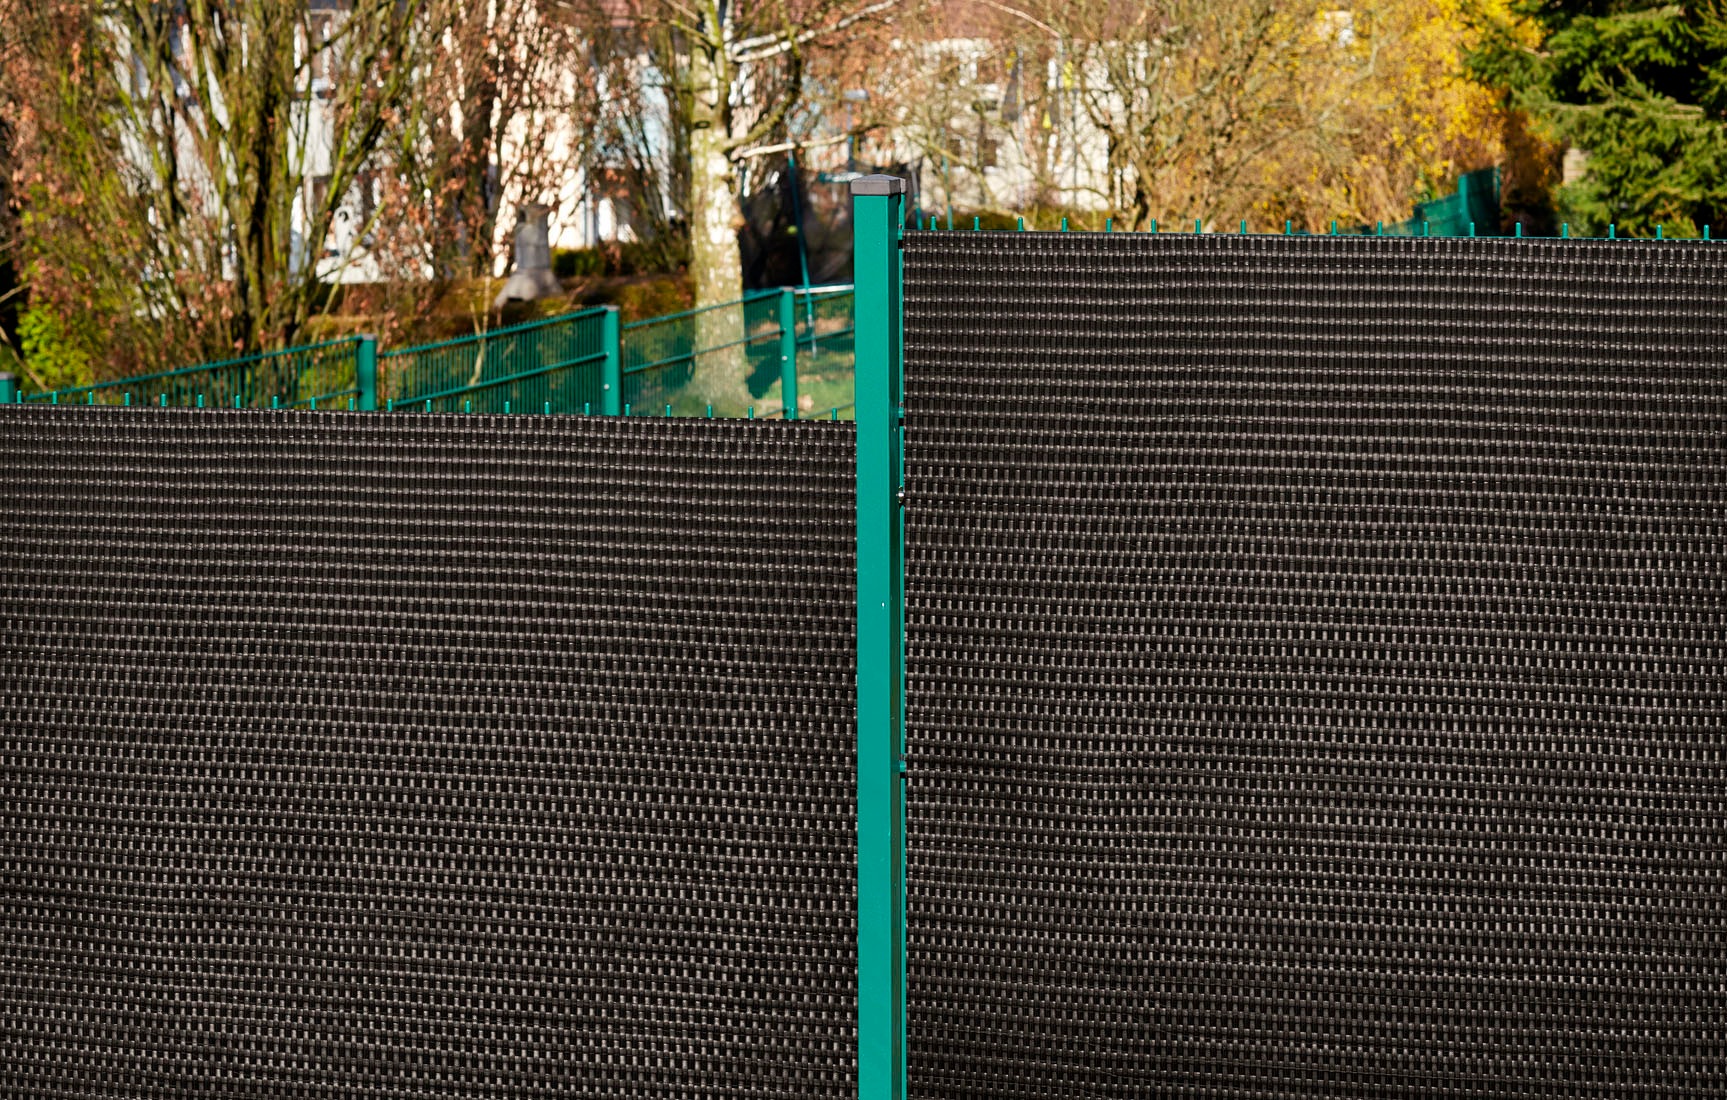 Gartenfreude Balkonsichtschutz, 5x0,9 m, individuell zuschneidbar, inkl. Kabelbinder